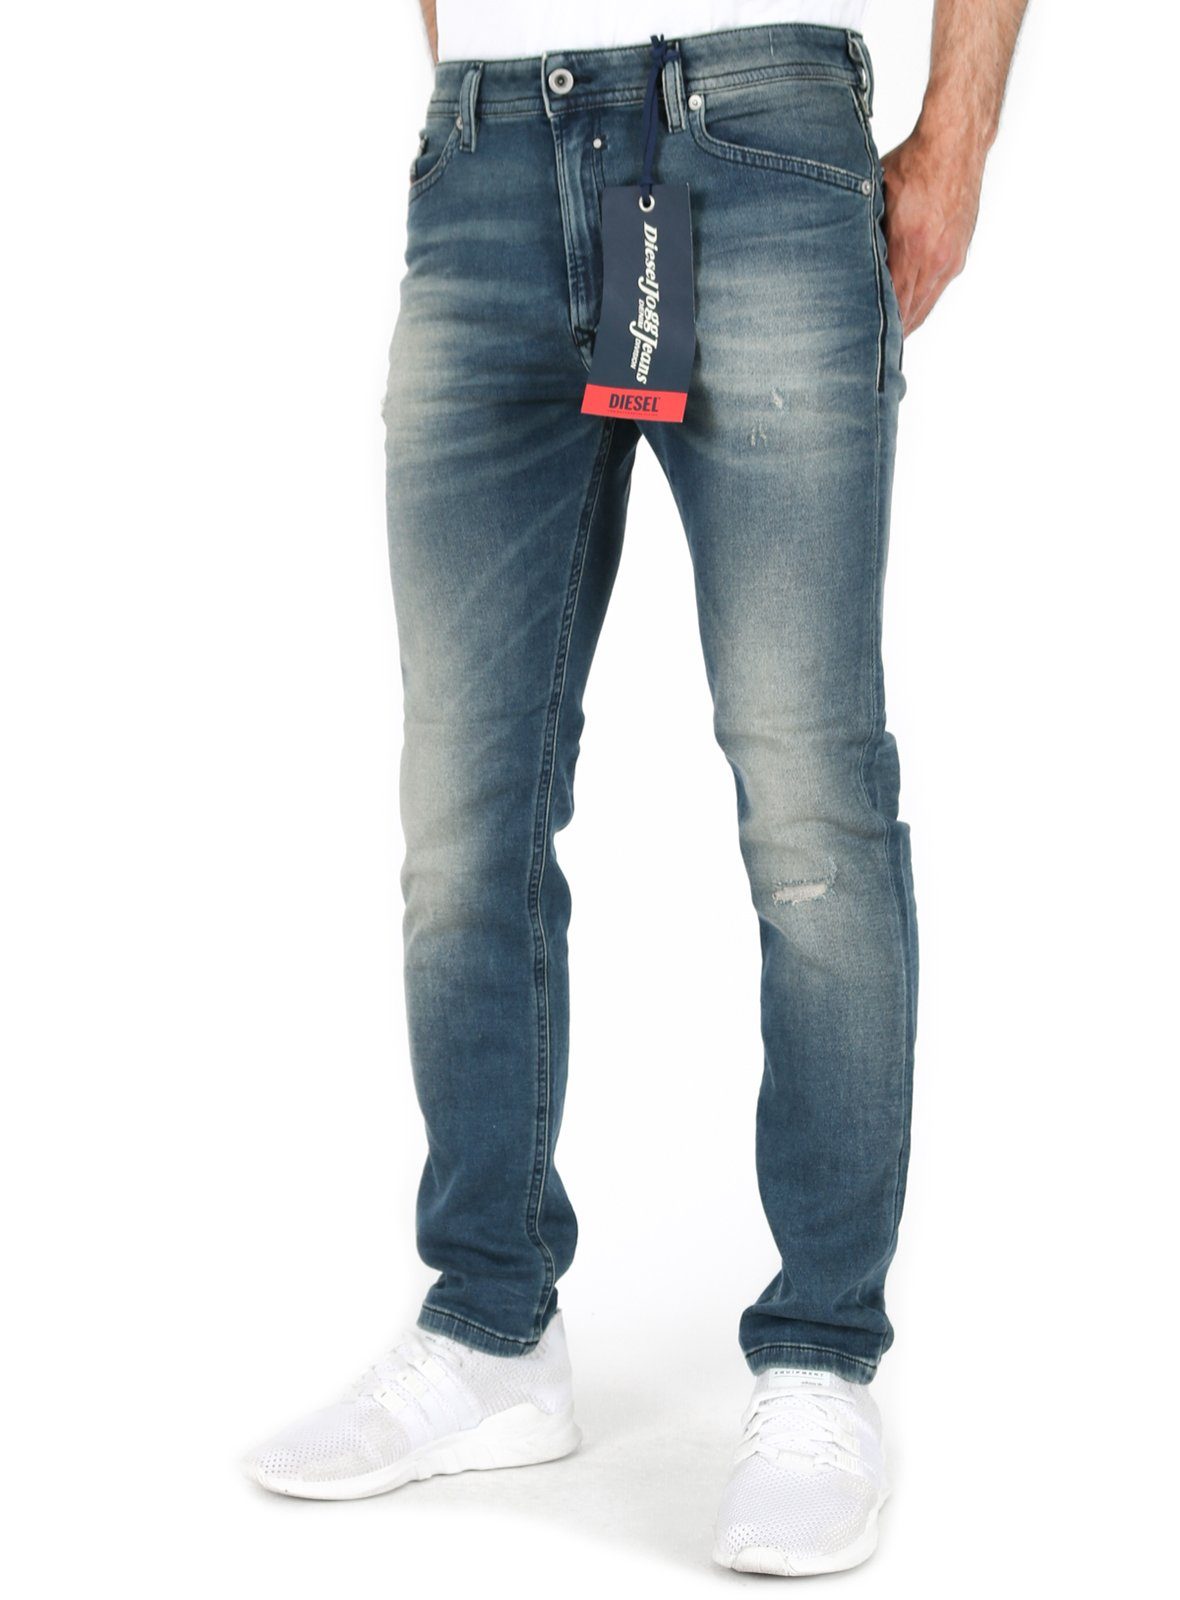 Diesel Skinny-fit-Jeans Herren Jogg Jeans Stretch Hose Blau, Spender-Ne  R96PC